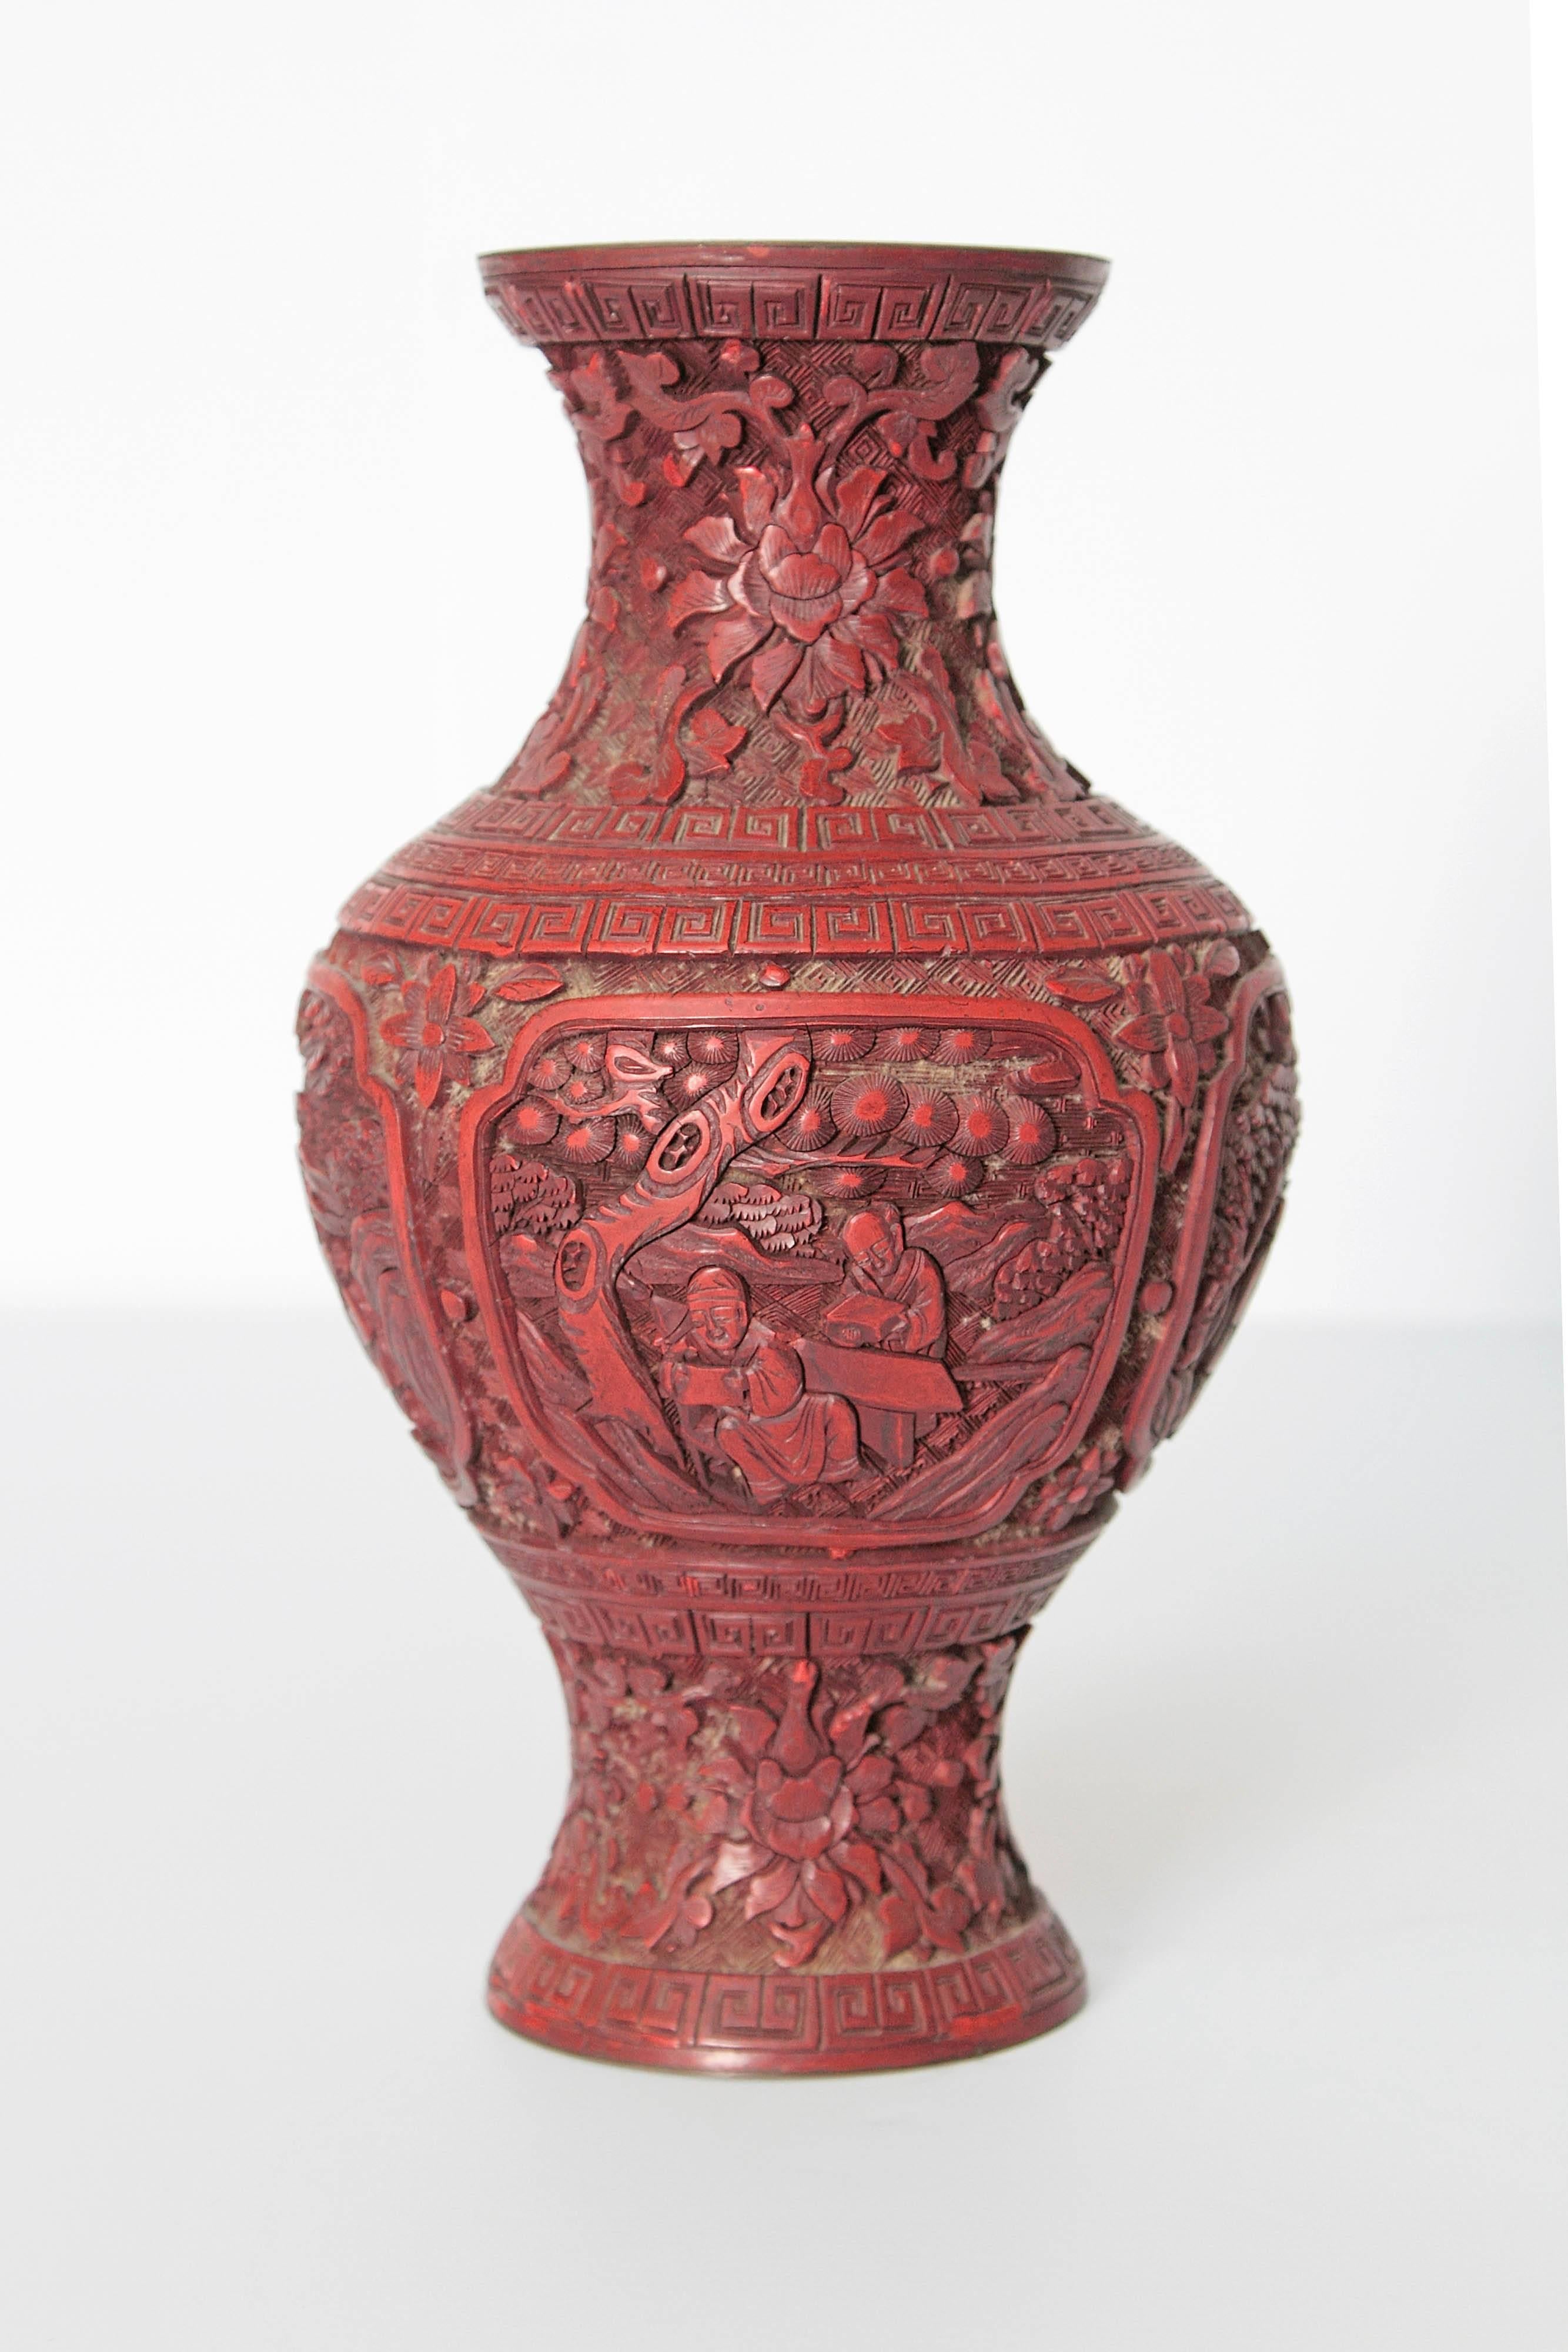 19th century lacquer vases